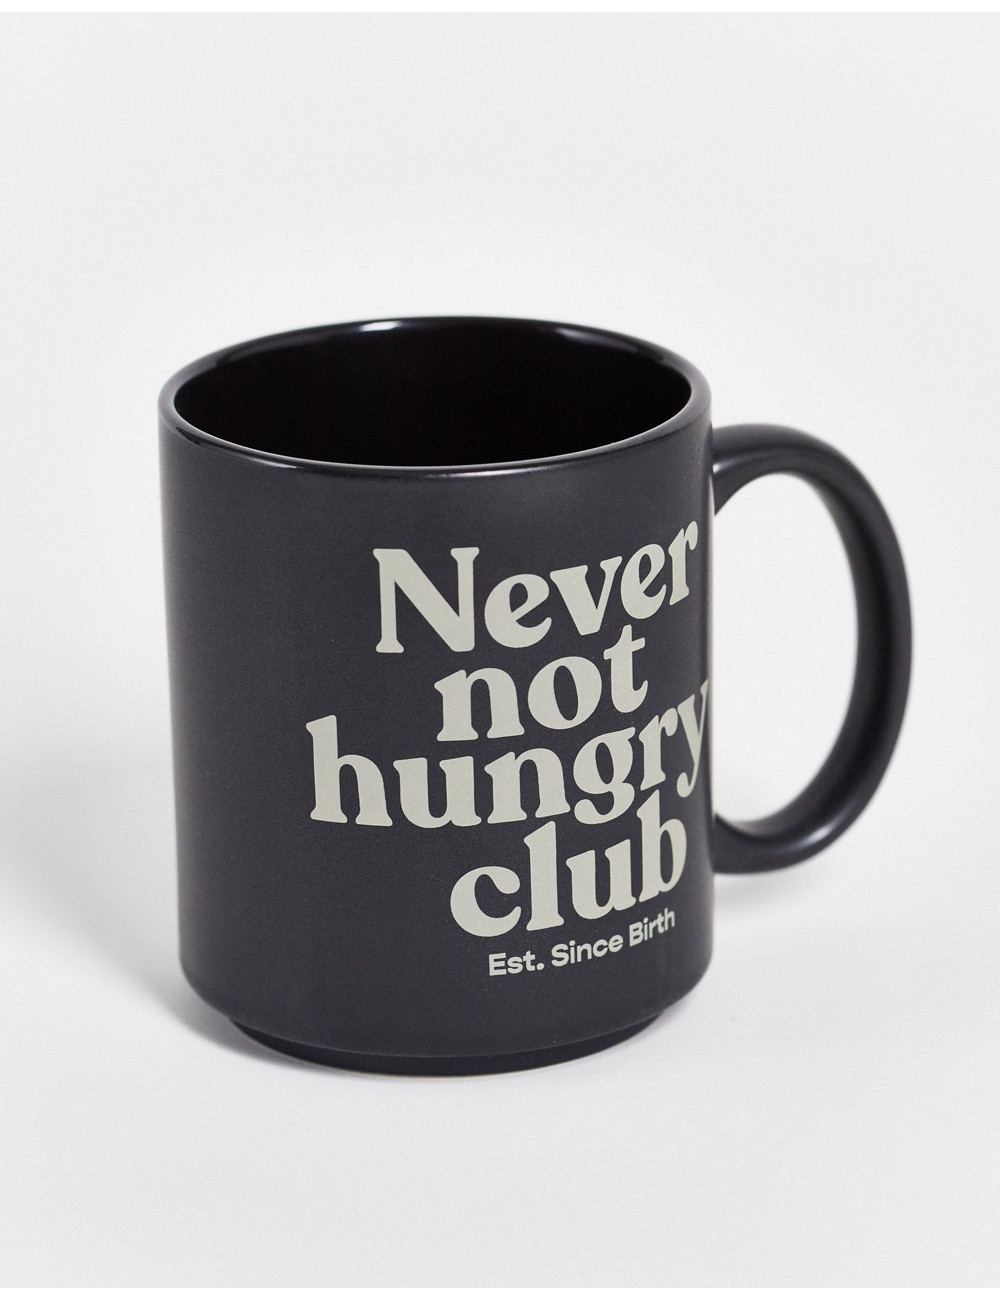 Typo 'never not hungry' mug...